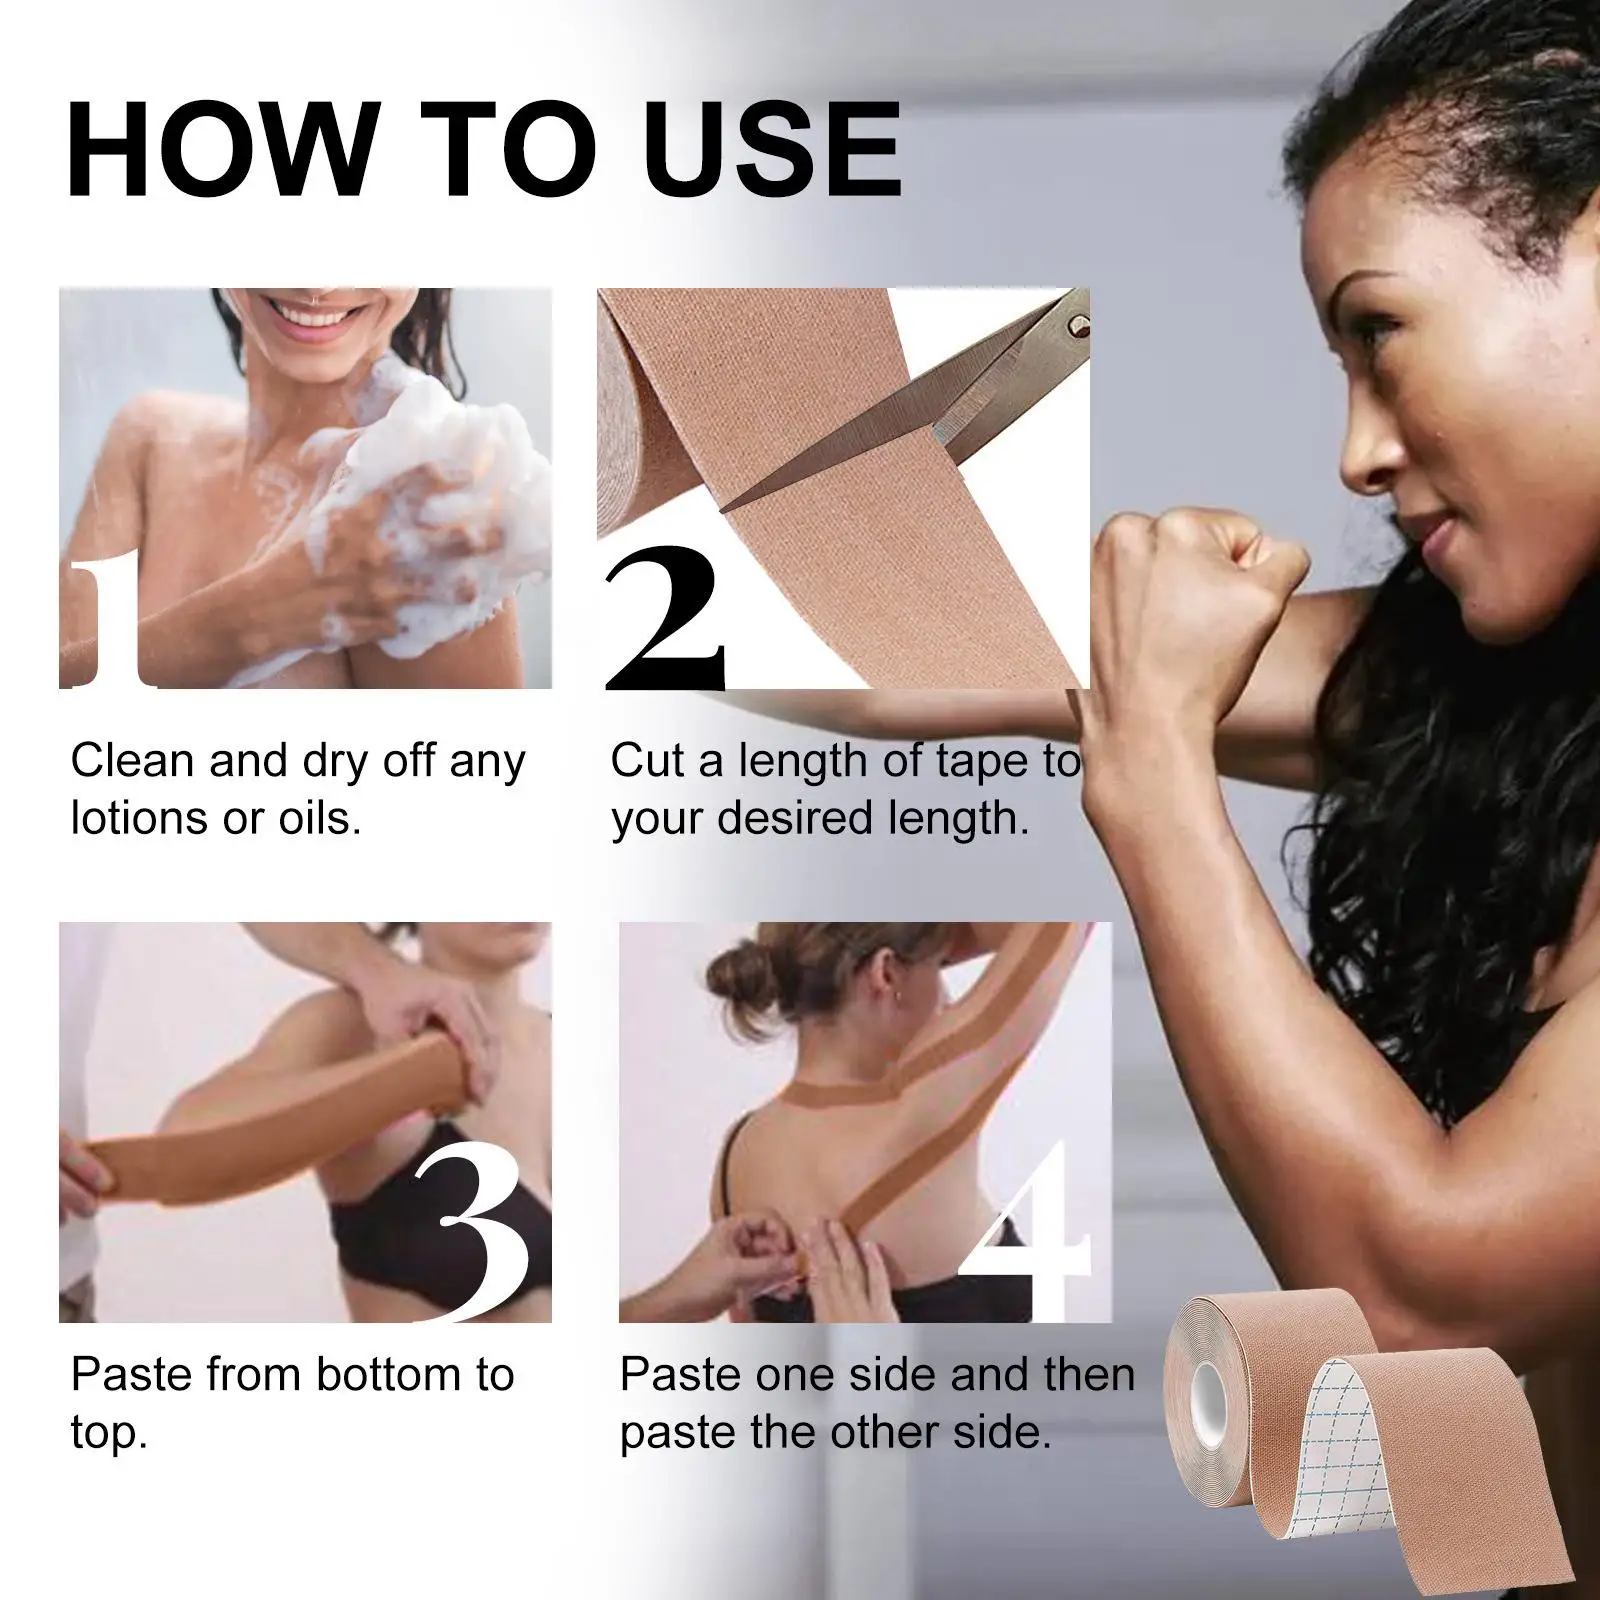  Bandage, Waterproof Sweatproof Elastic Breathable Wrap Tape for Sports Calves Elbows Shoulders  Women